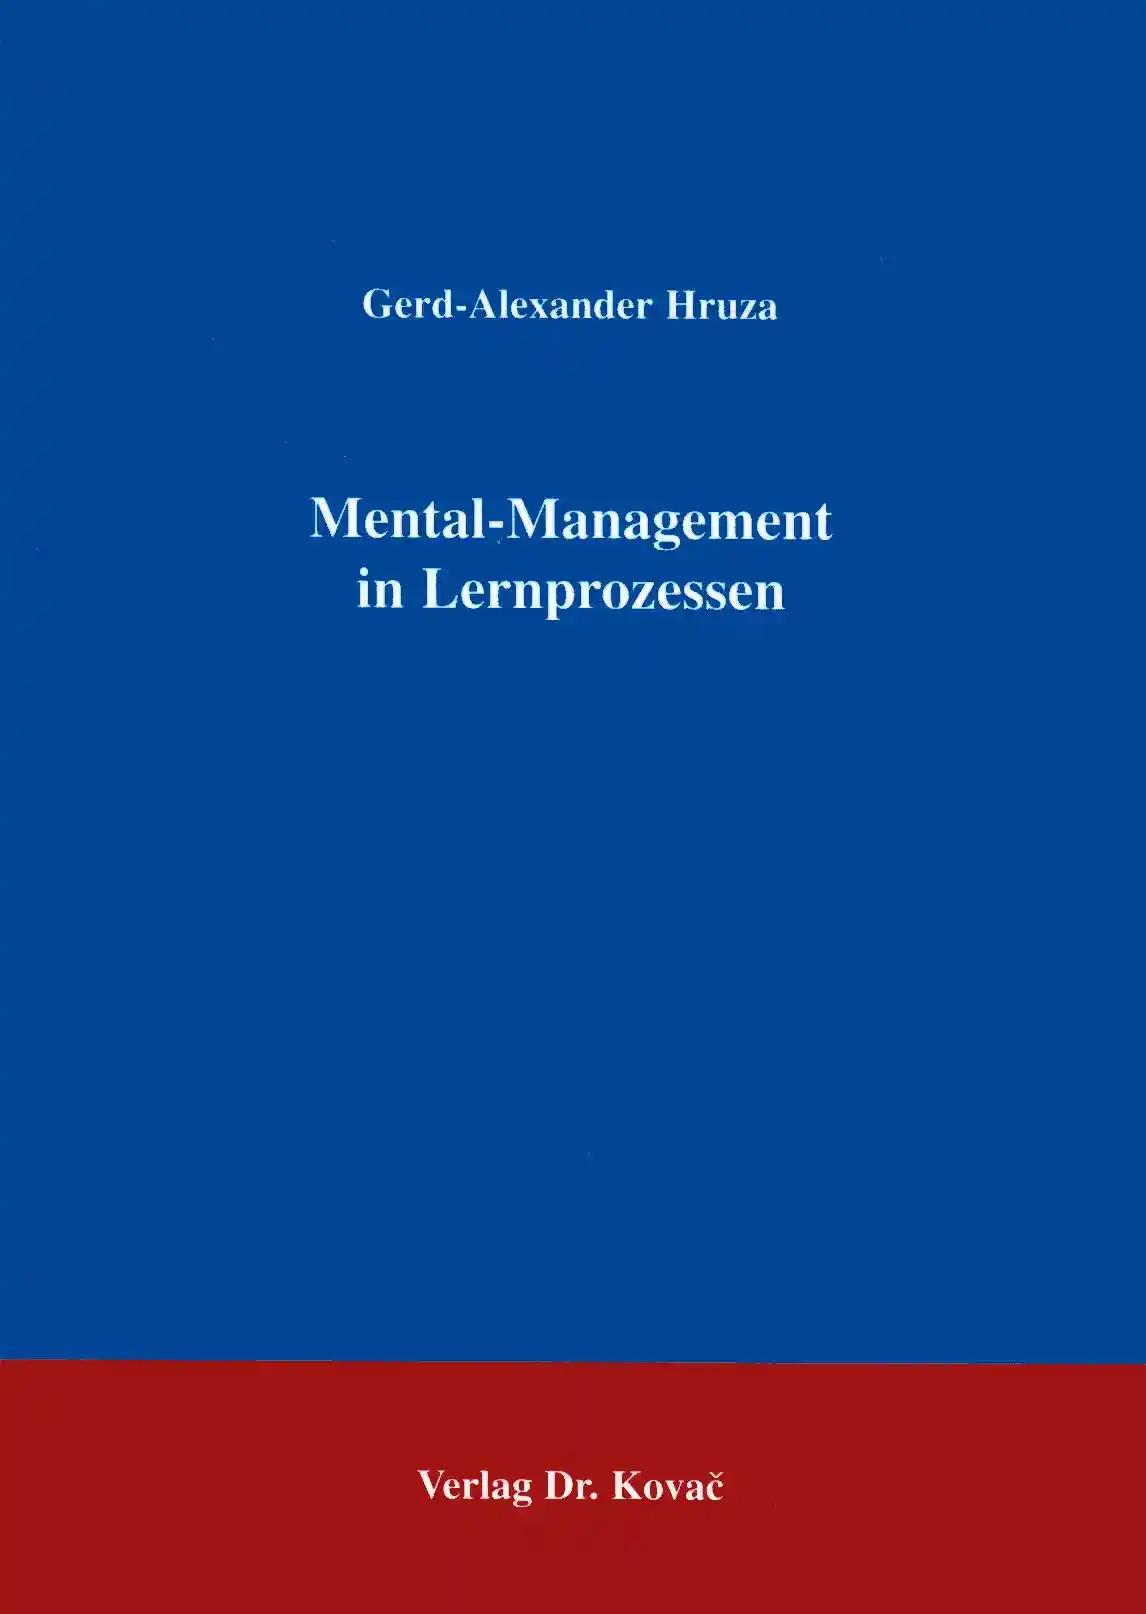 Mental- Management in Lernprozessen, - Gerd-Alexander Hruza